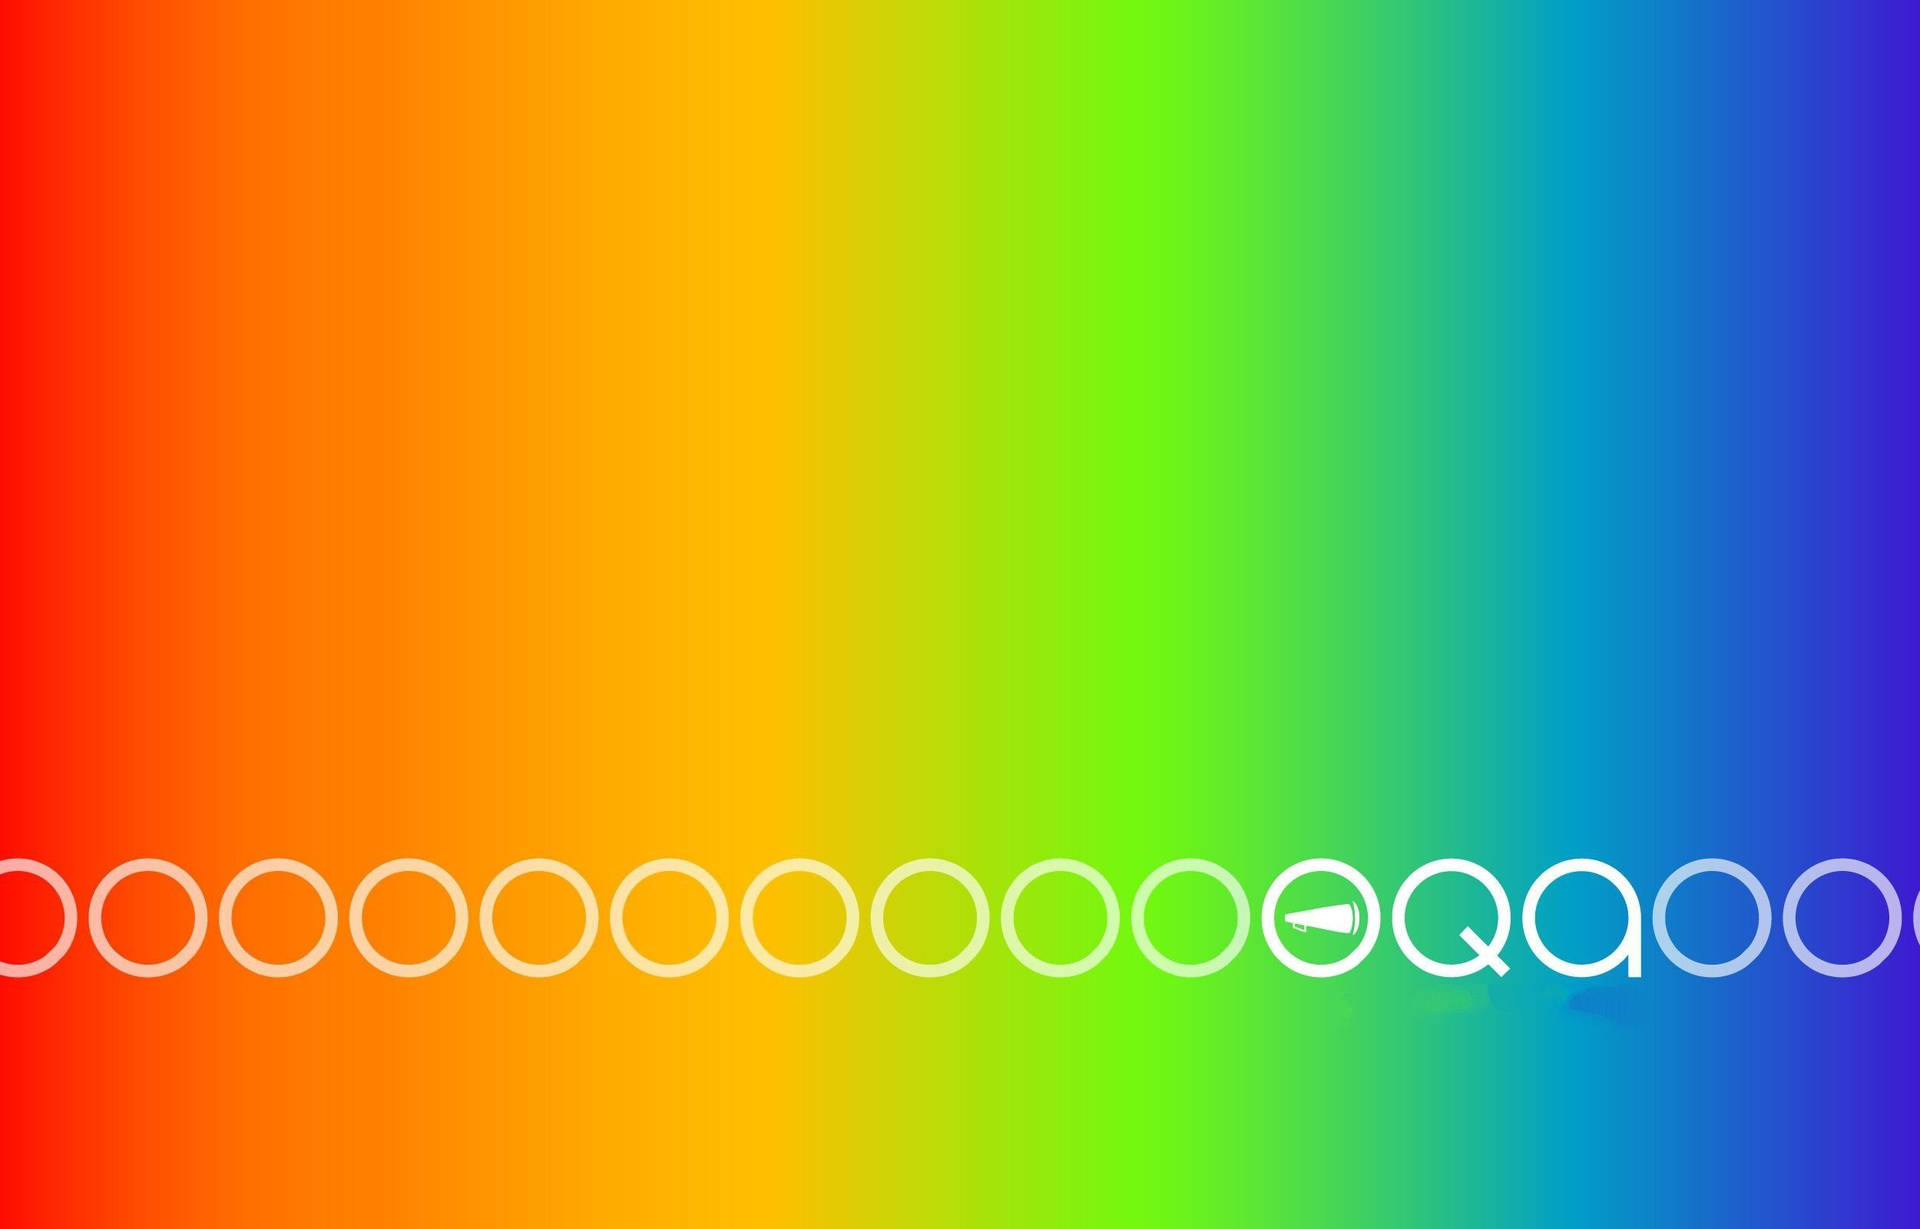 Vibrant Blended Rainbow Lgbtqa+ Pride